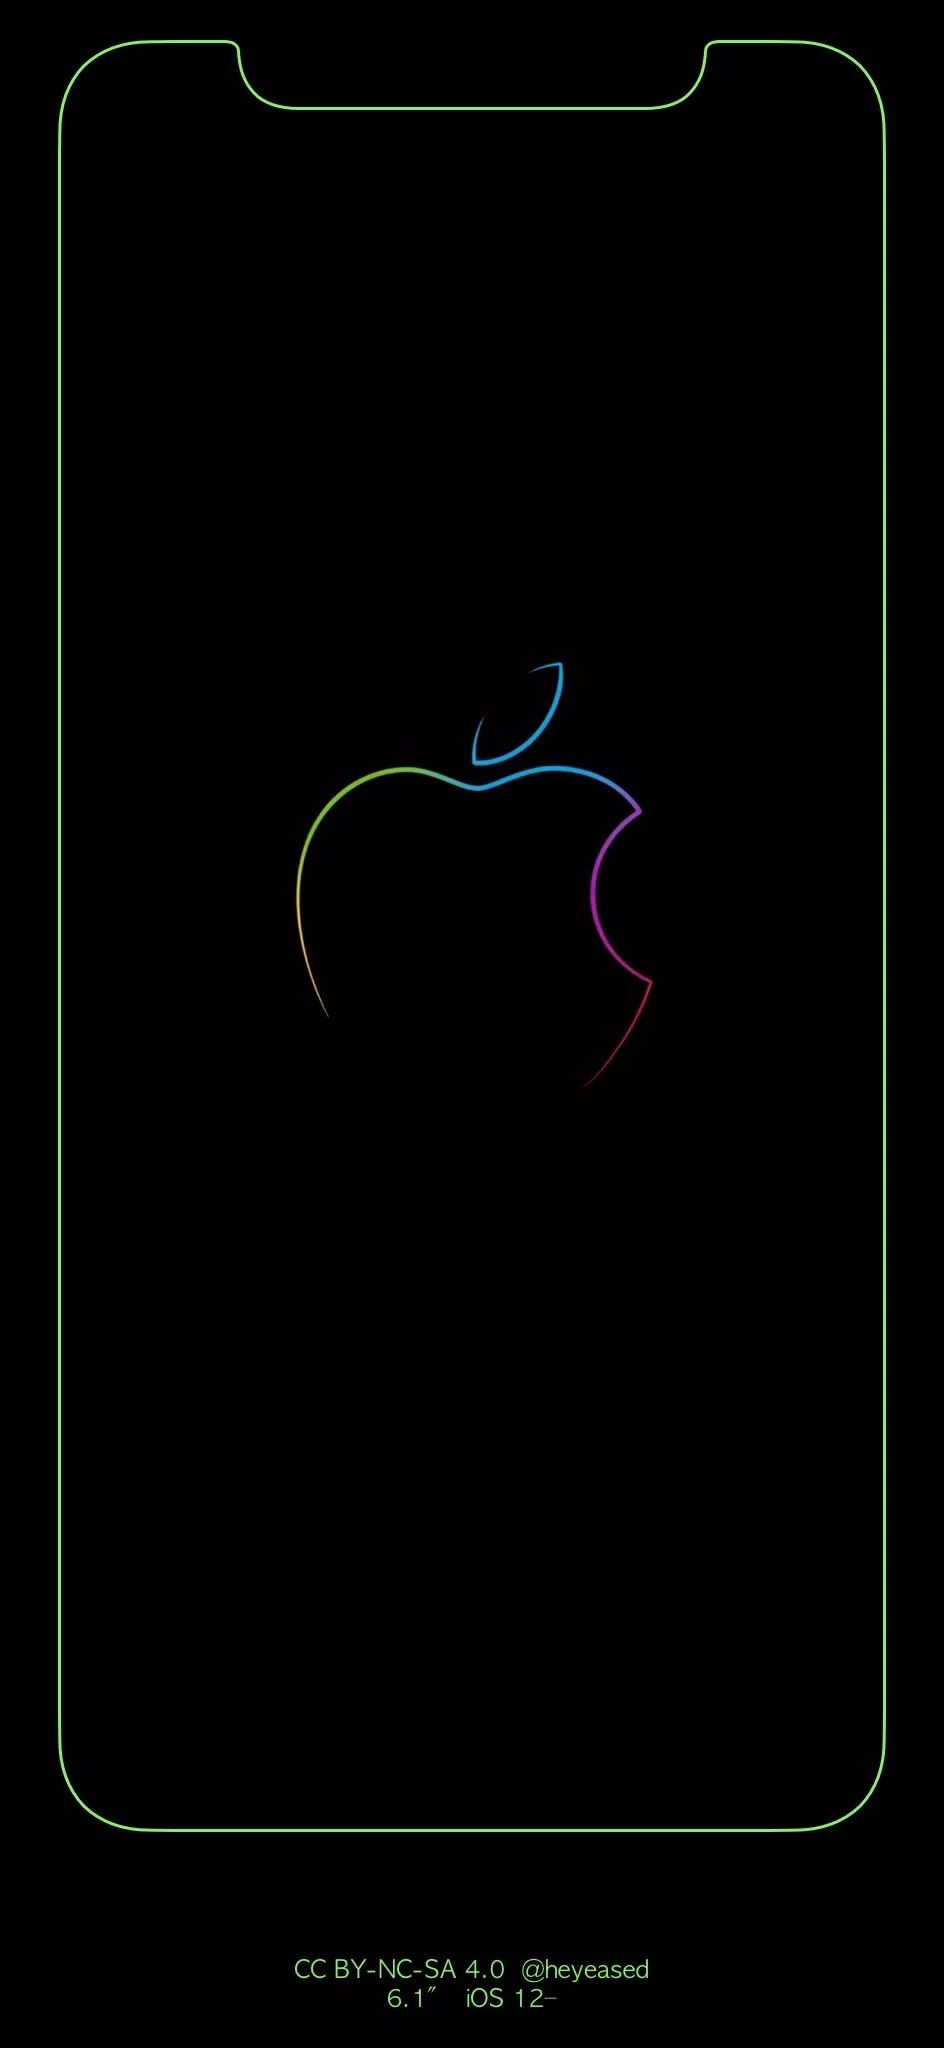 iphone xr跑马灯壁纸 苹果xr带logo边框发光壁纸高清无水印下载